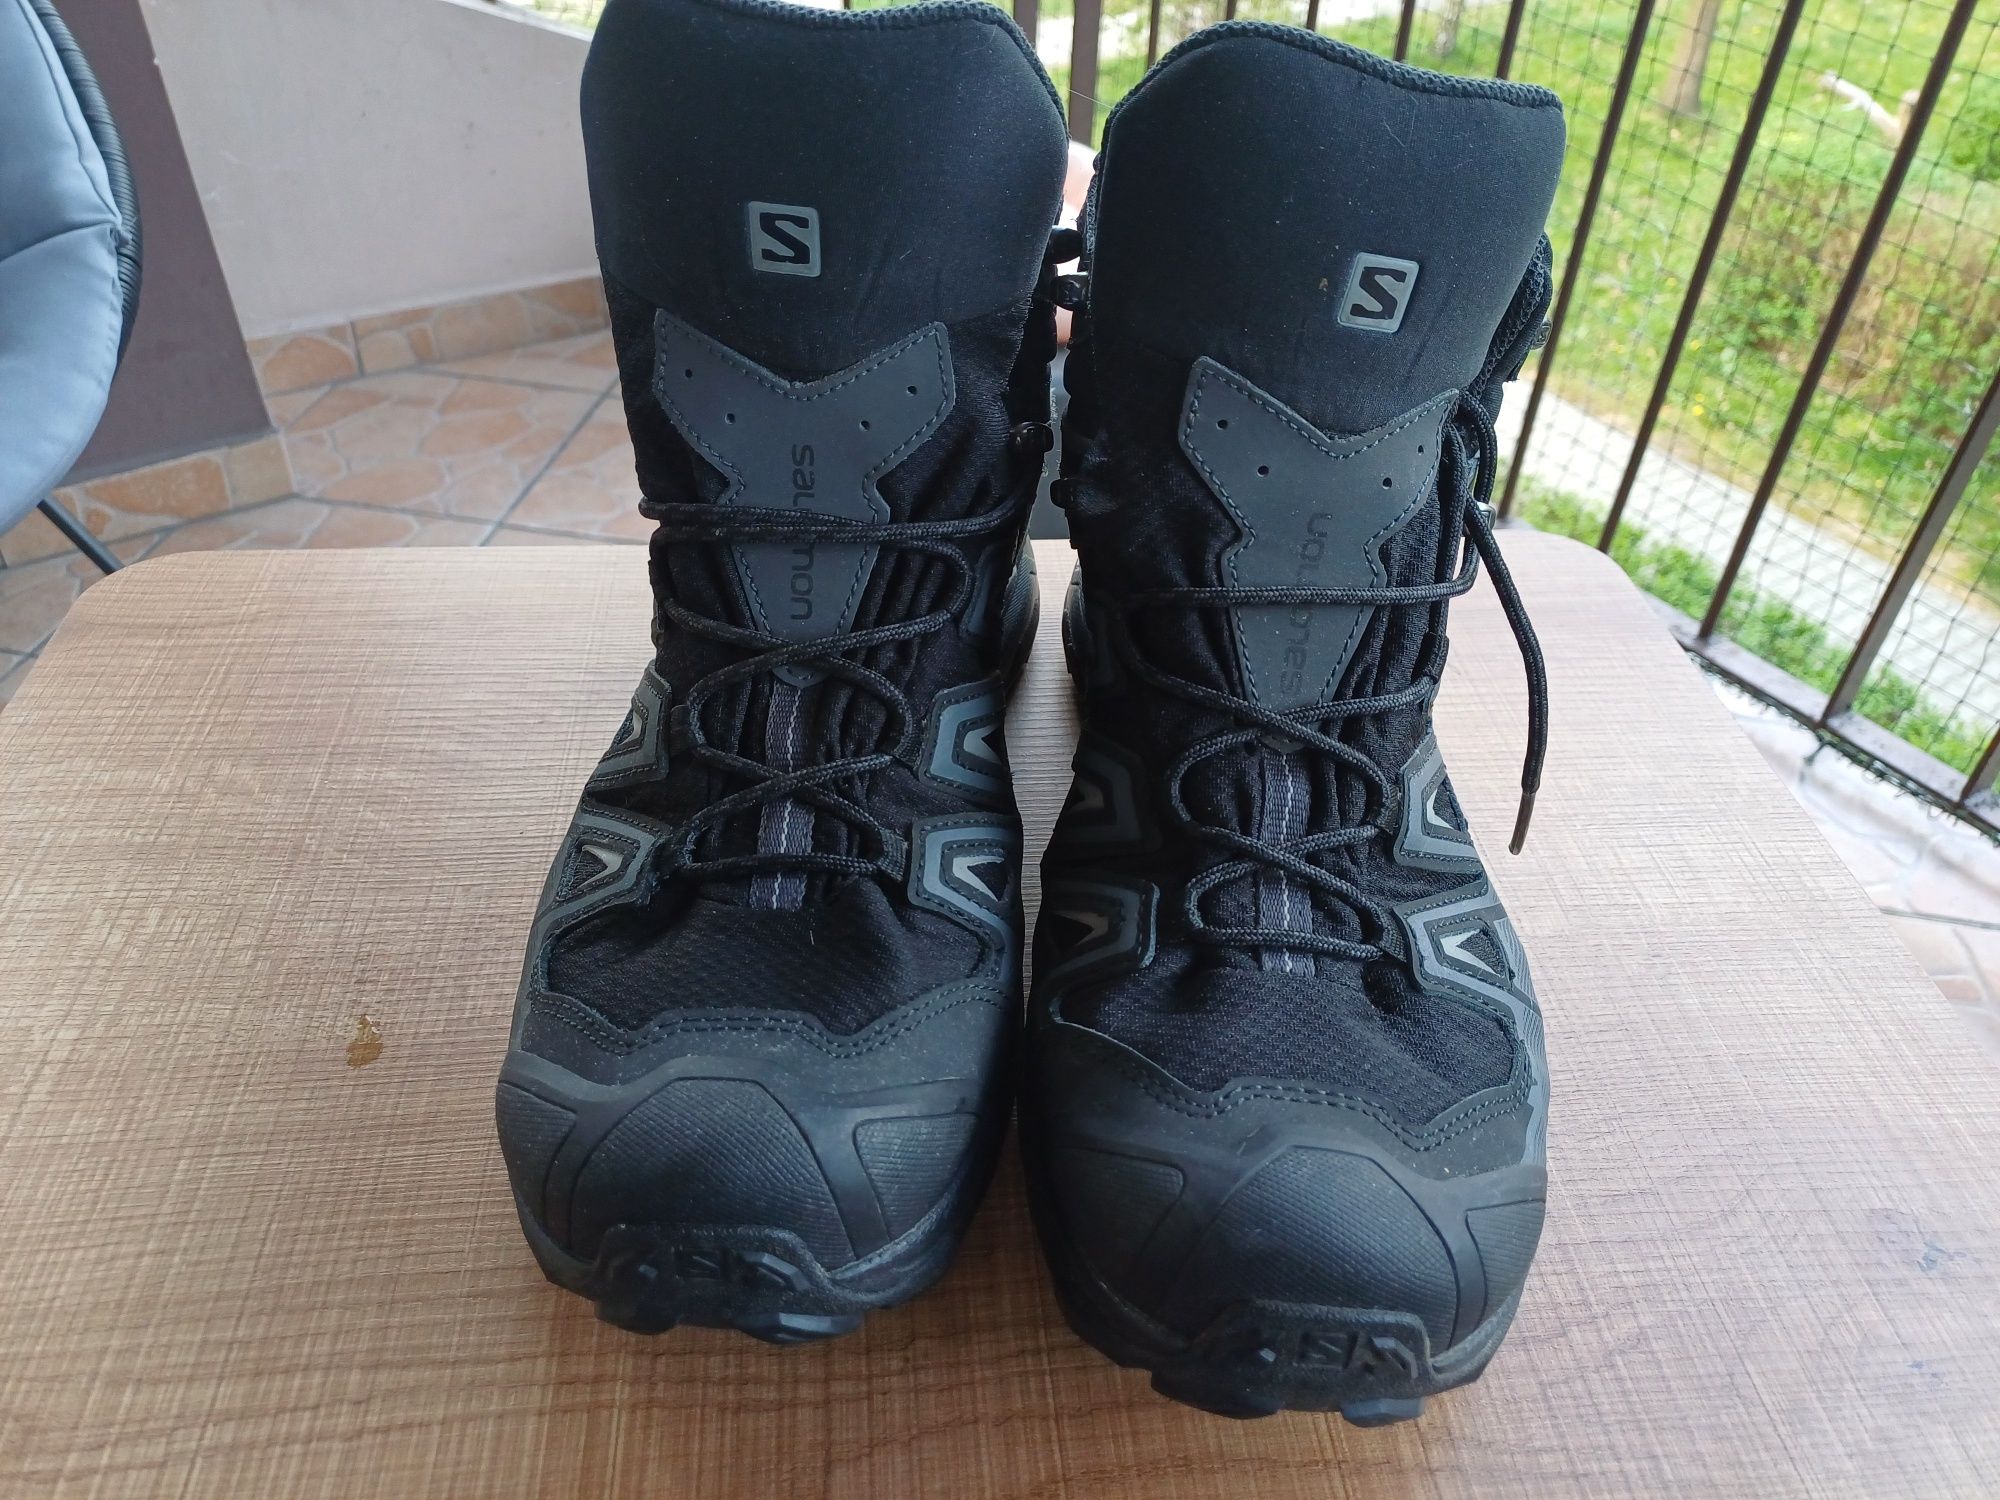 Salomon buty trekkingowe męskie